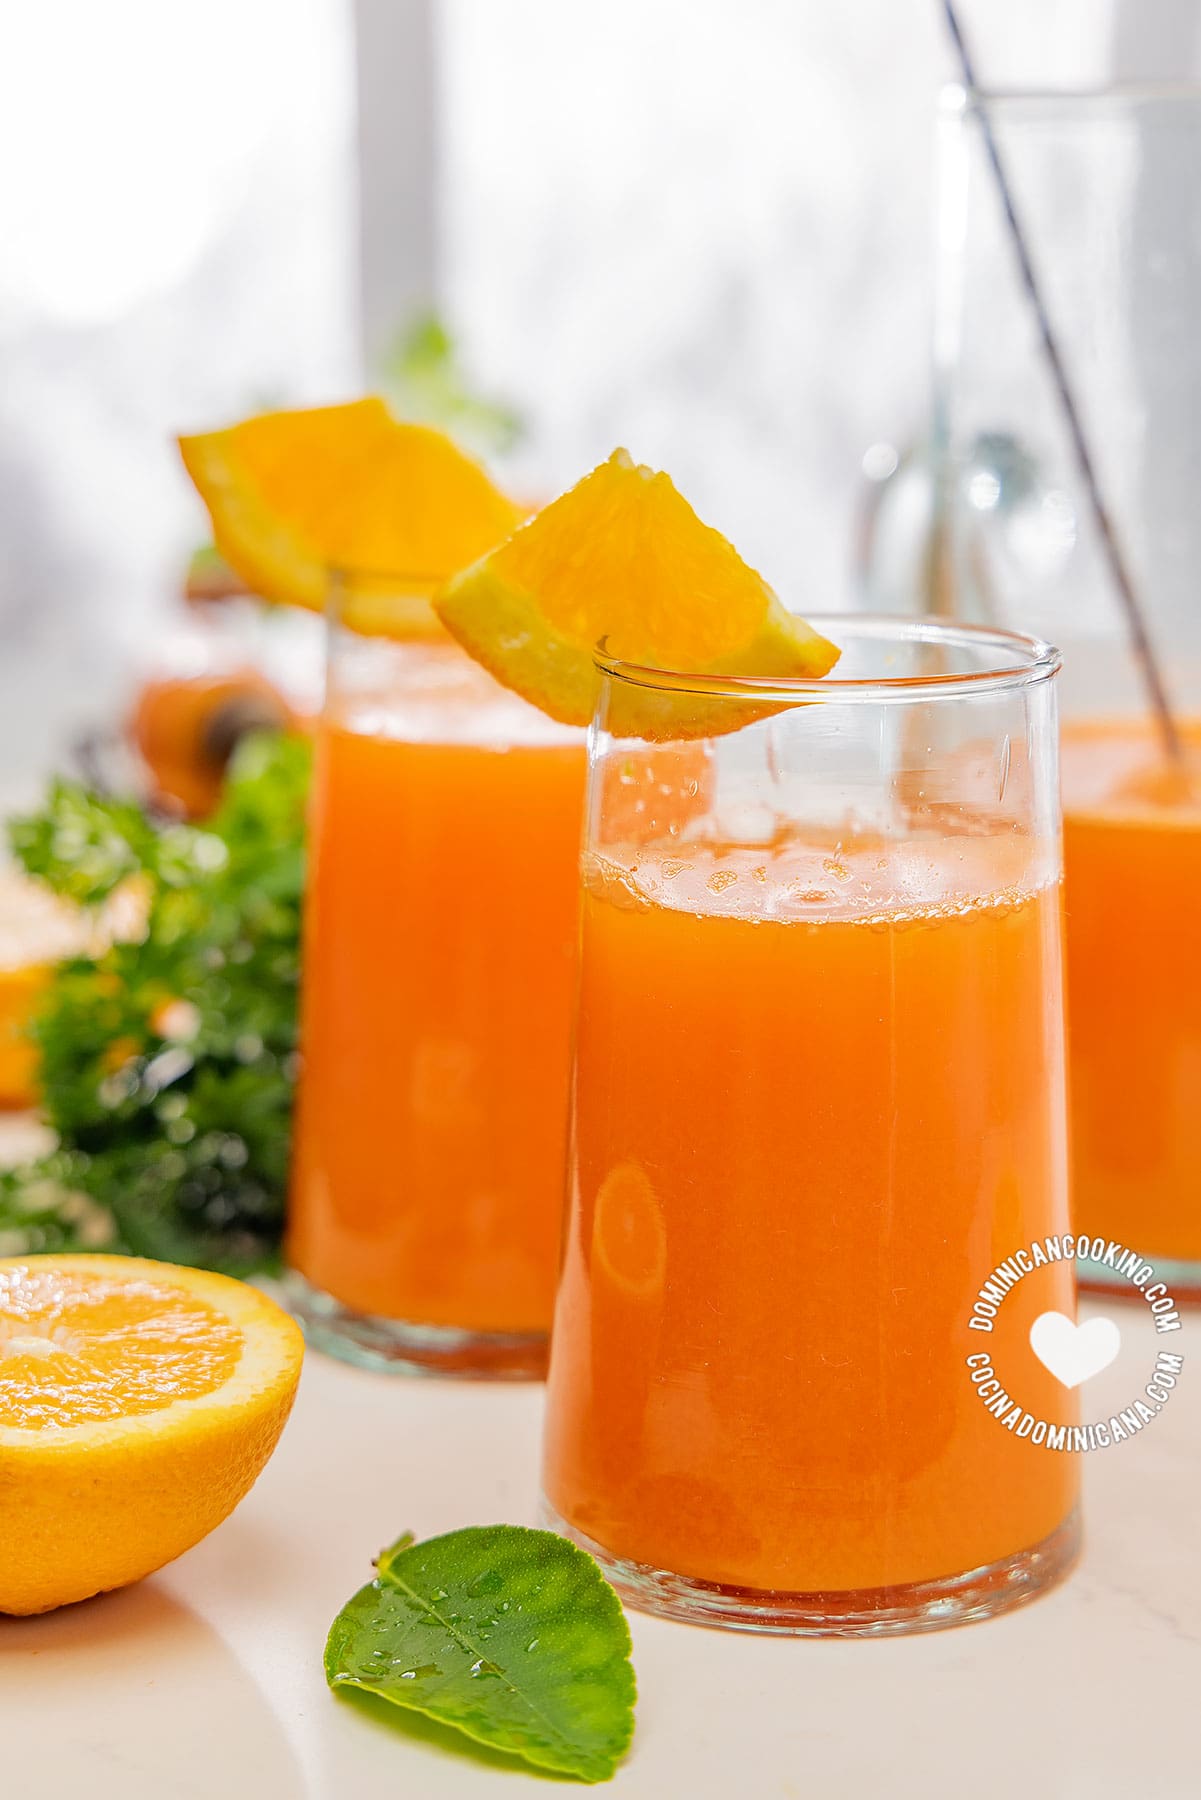 Jugos de zanahoria y naranja (carrot and orange juice).